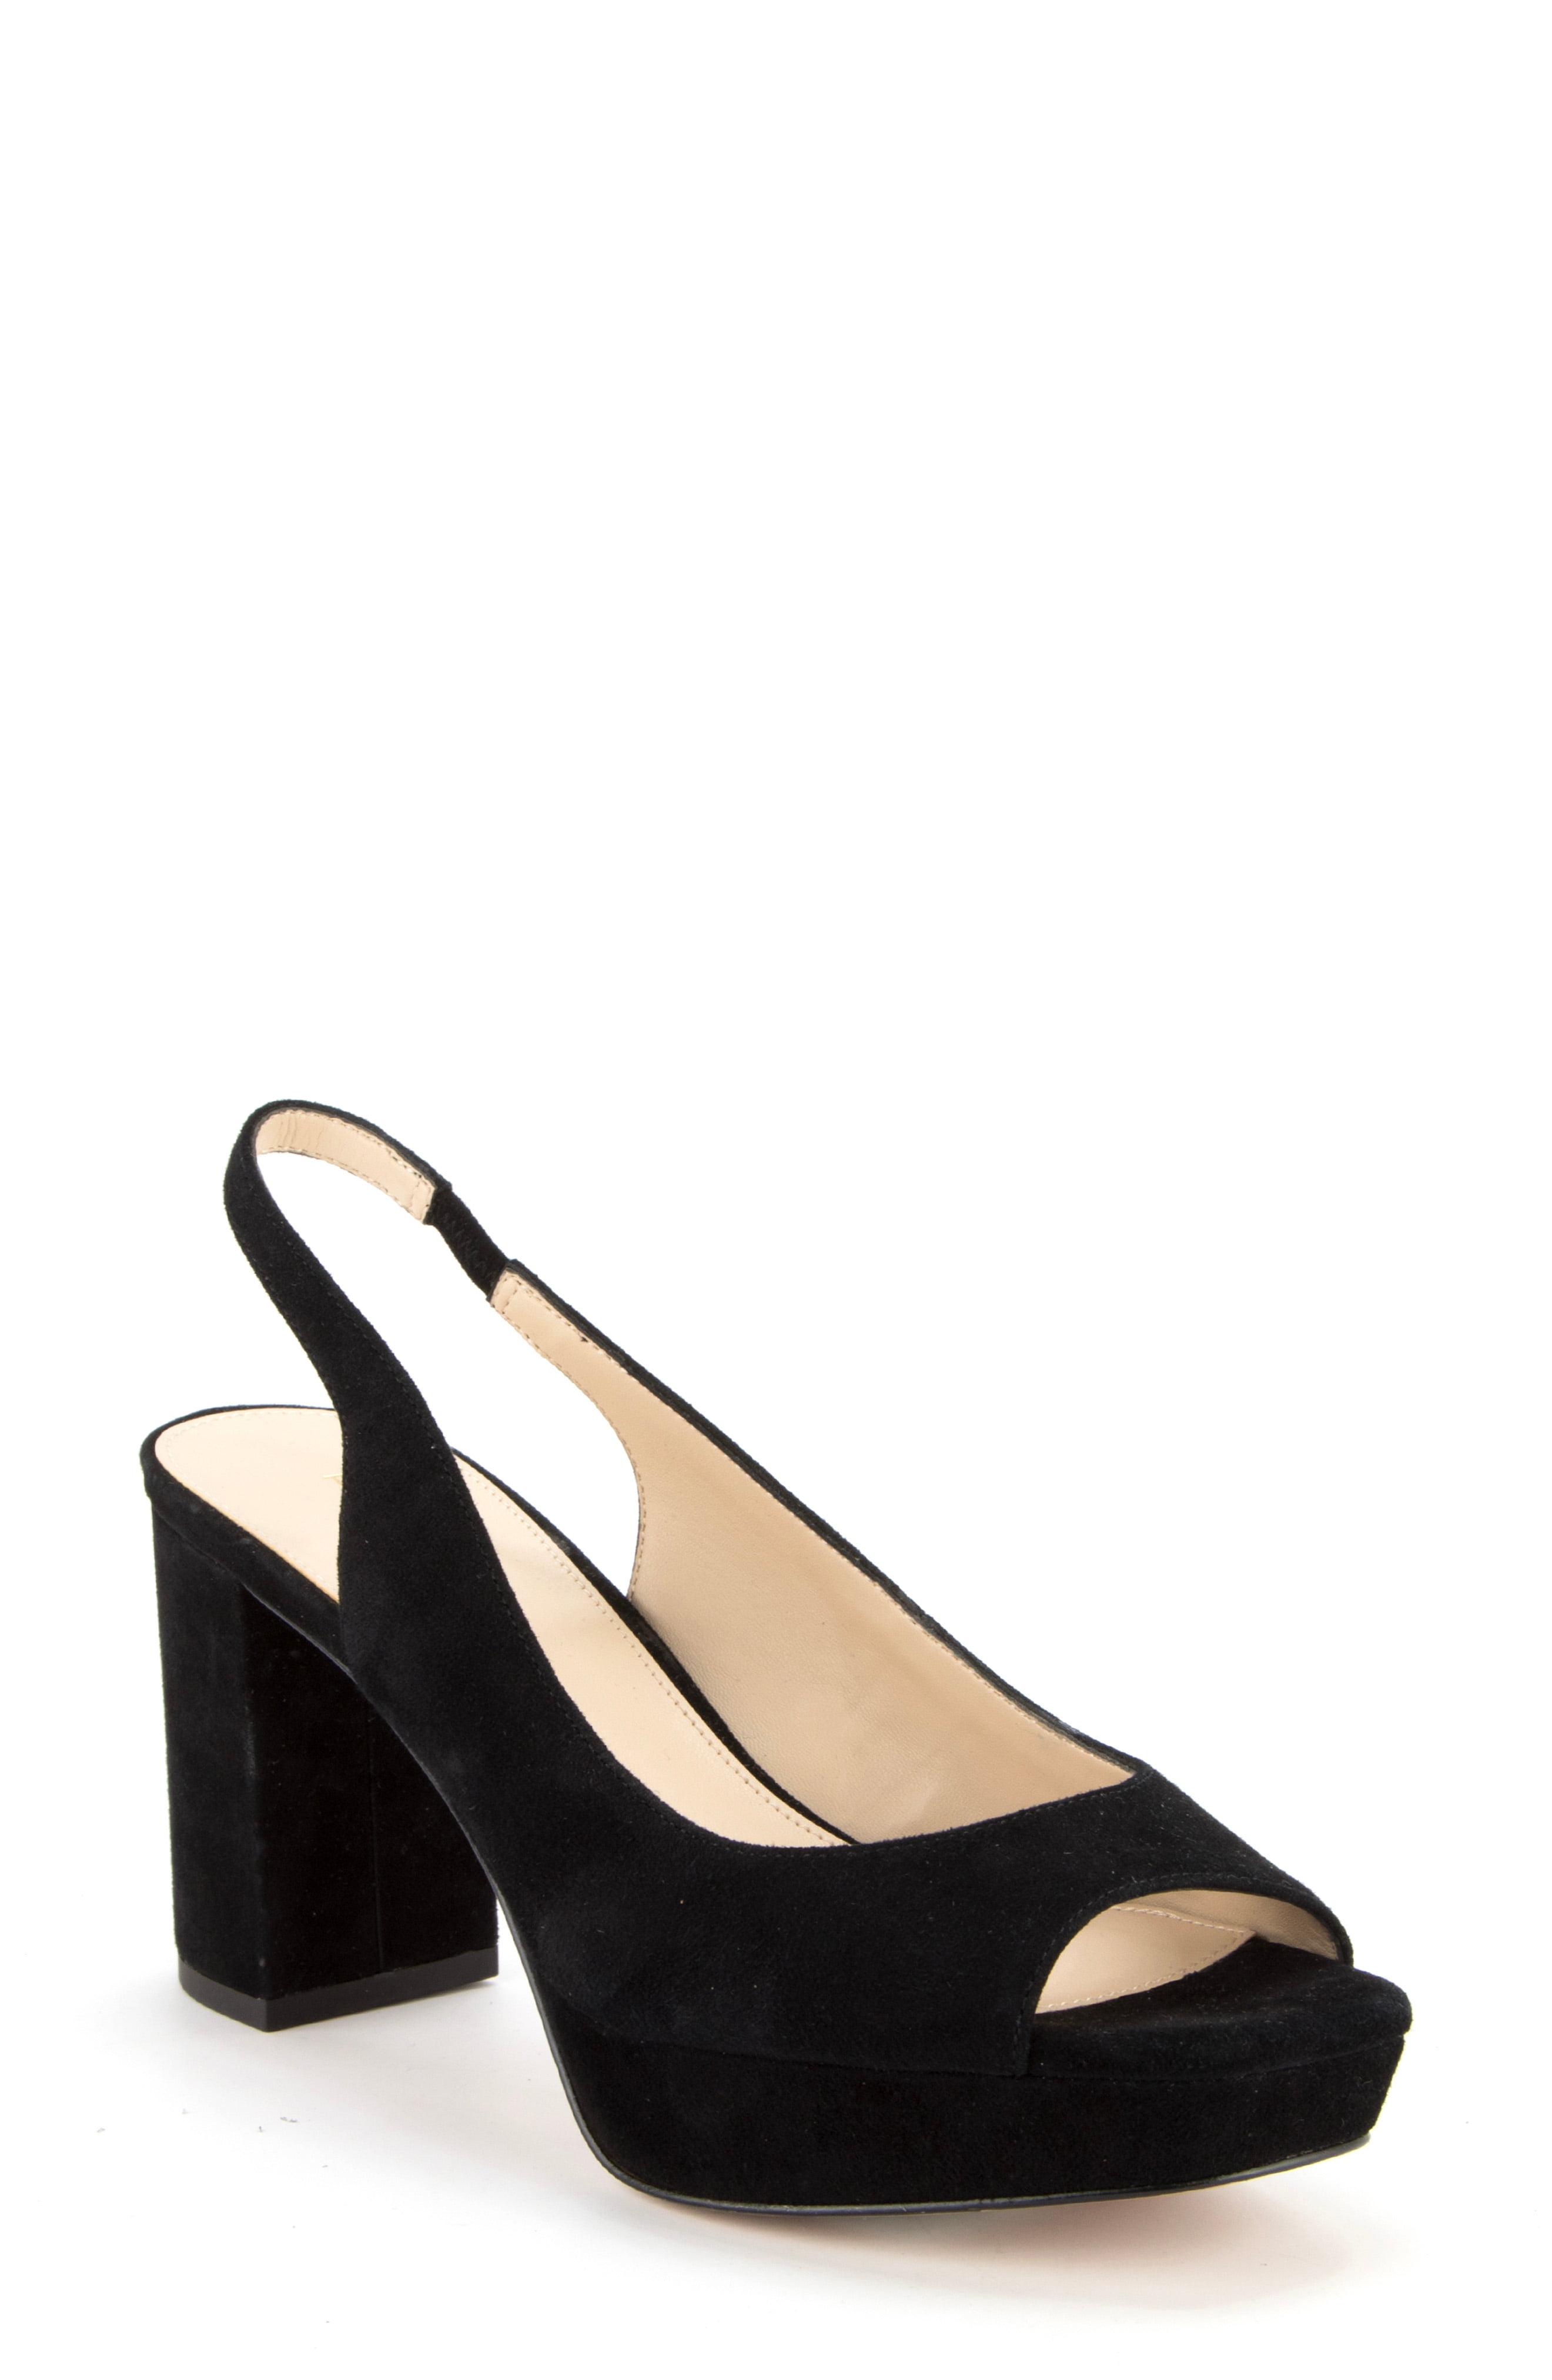 Pelle Moda Amaya Slingback Platform Sandal in Black Suede (Black) - Lyst